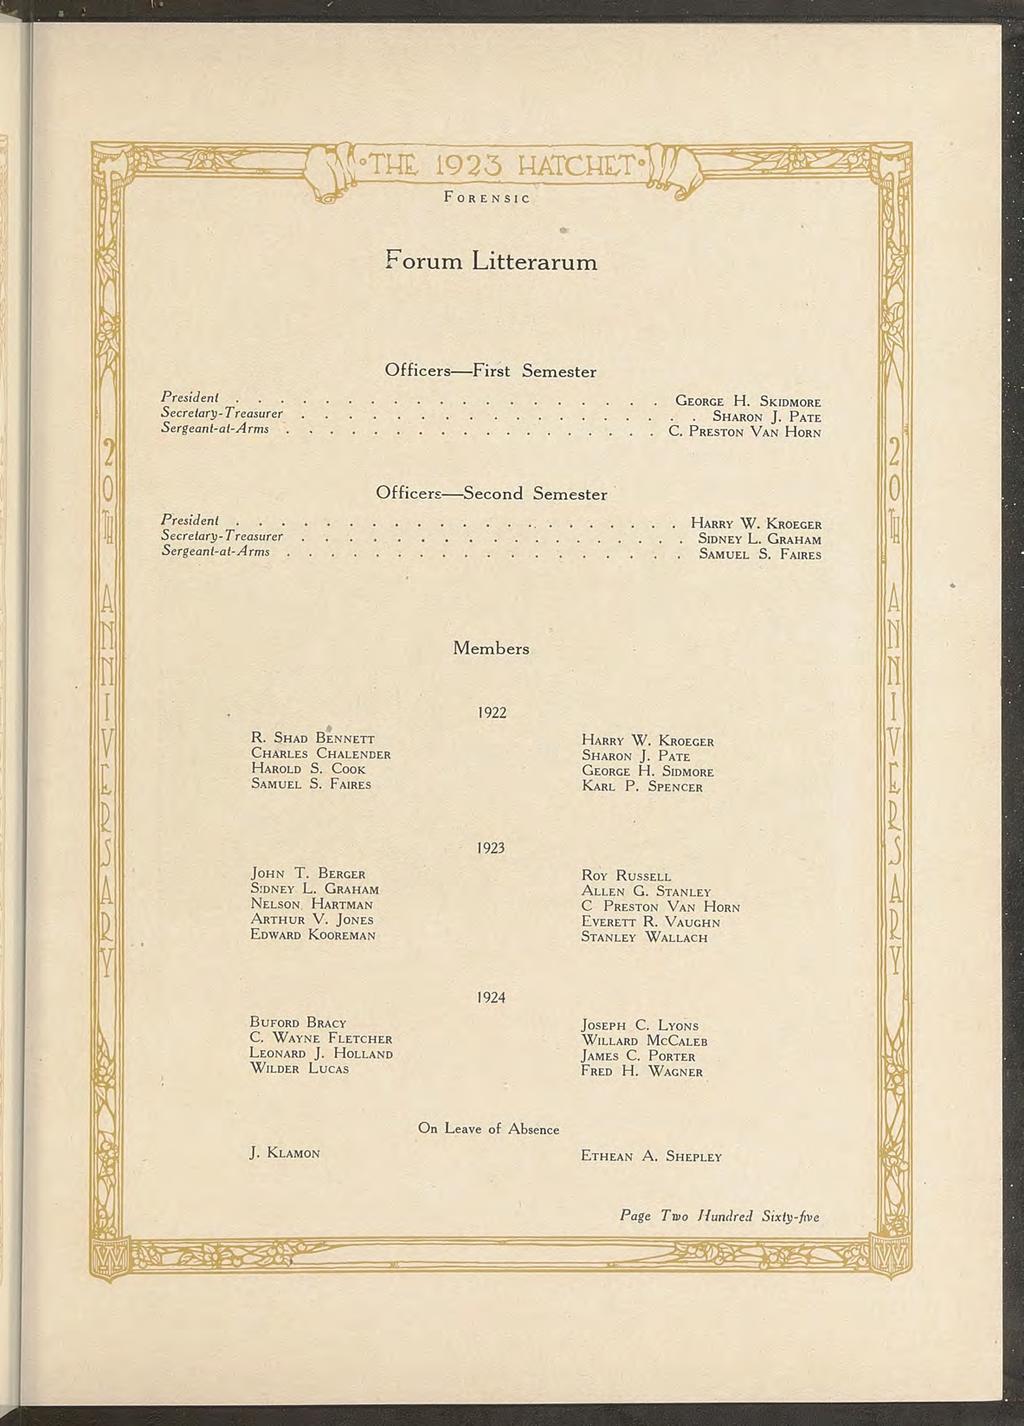 ^ TH 1925 HTCHET FORENSIC Forum Ltterarum Offcers Frst Semester Presdent GEORGE H. SKIDMORE Secretary-Treasurer SHRON J. PTE Sergeant-al-rms C. PRESTON VN HORN Offcers Second Semester Presdent.